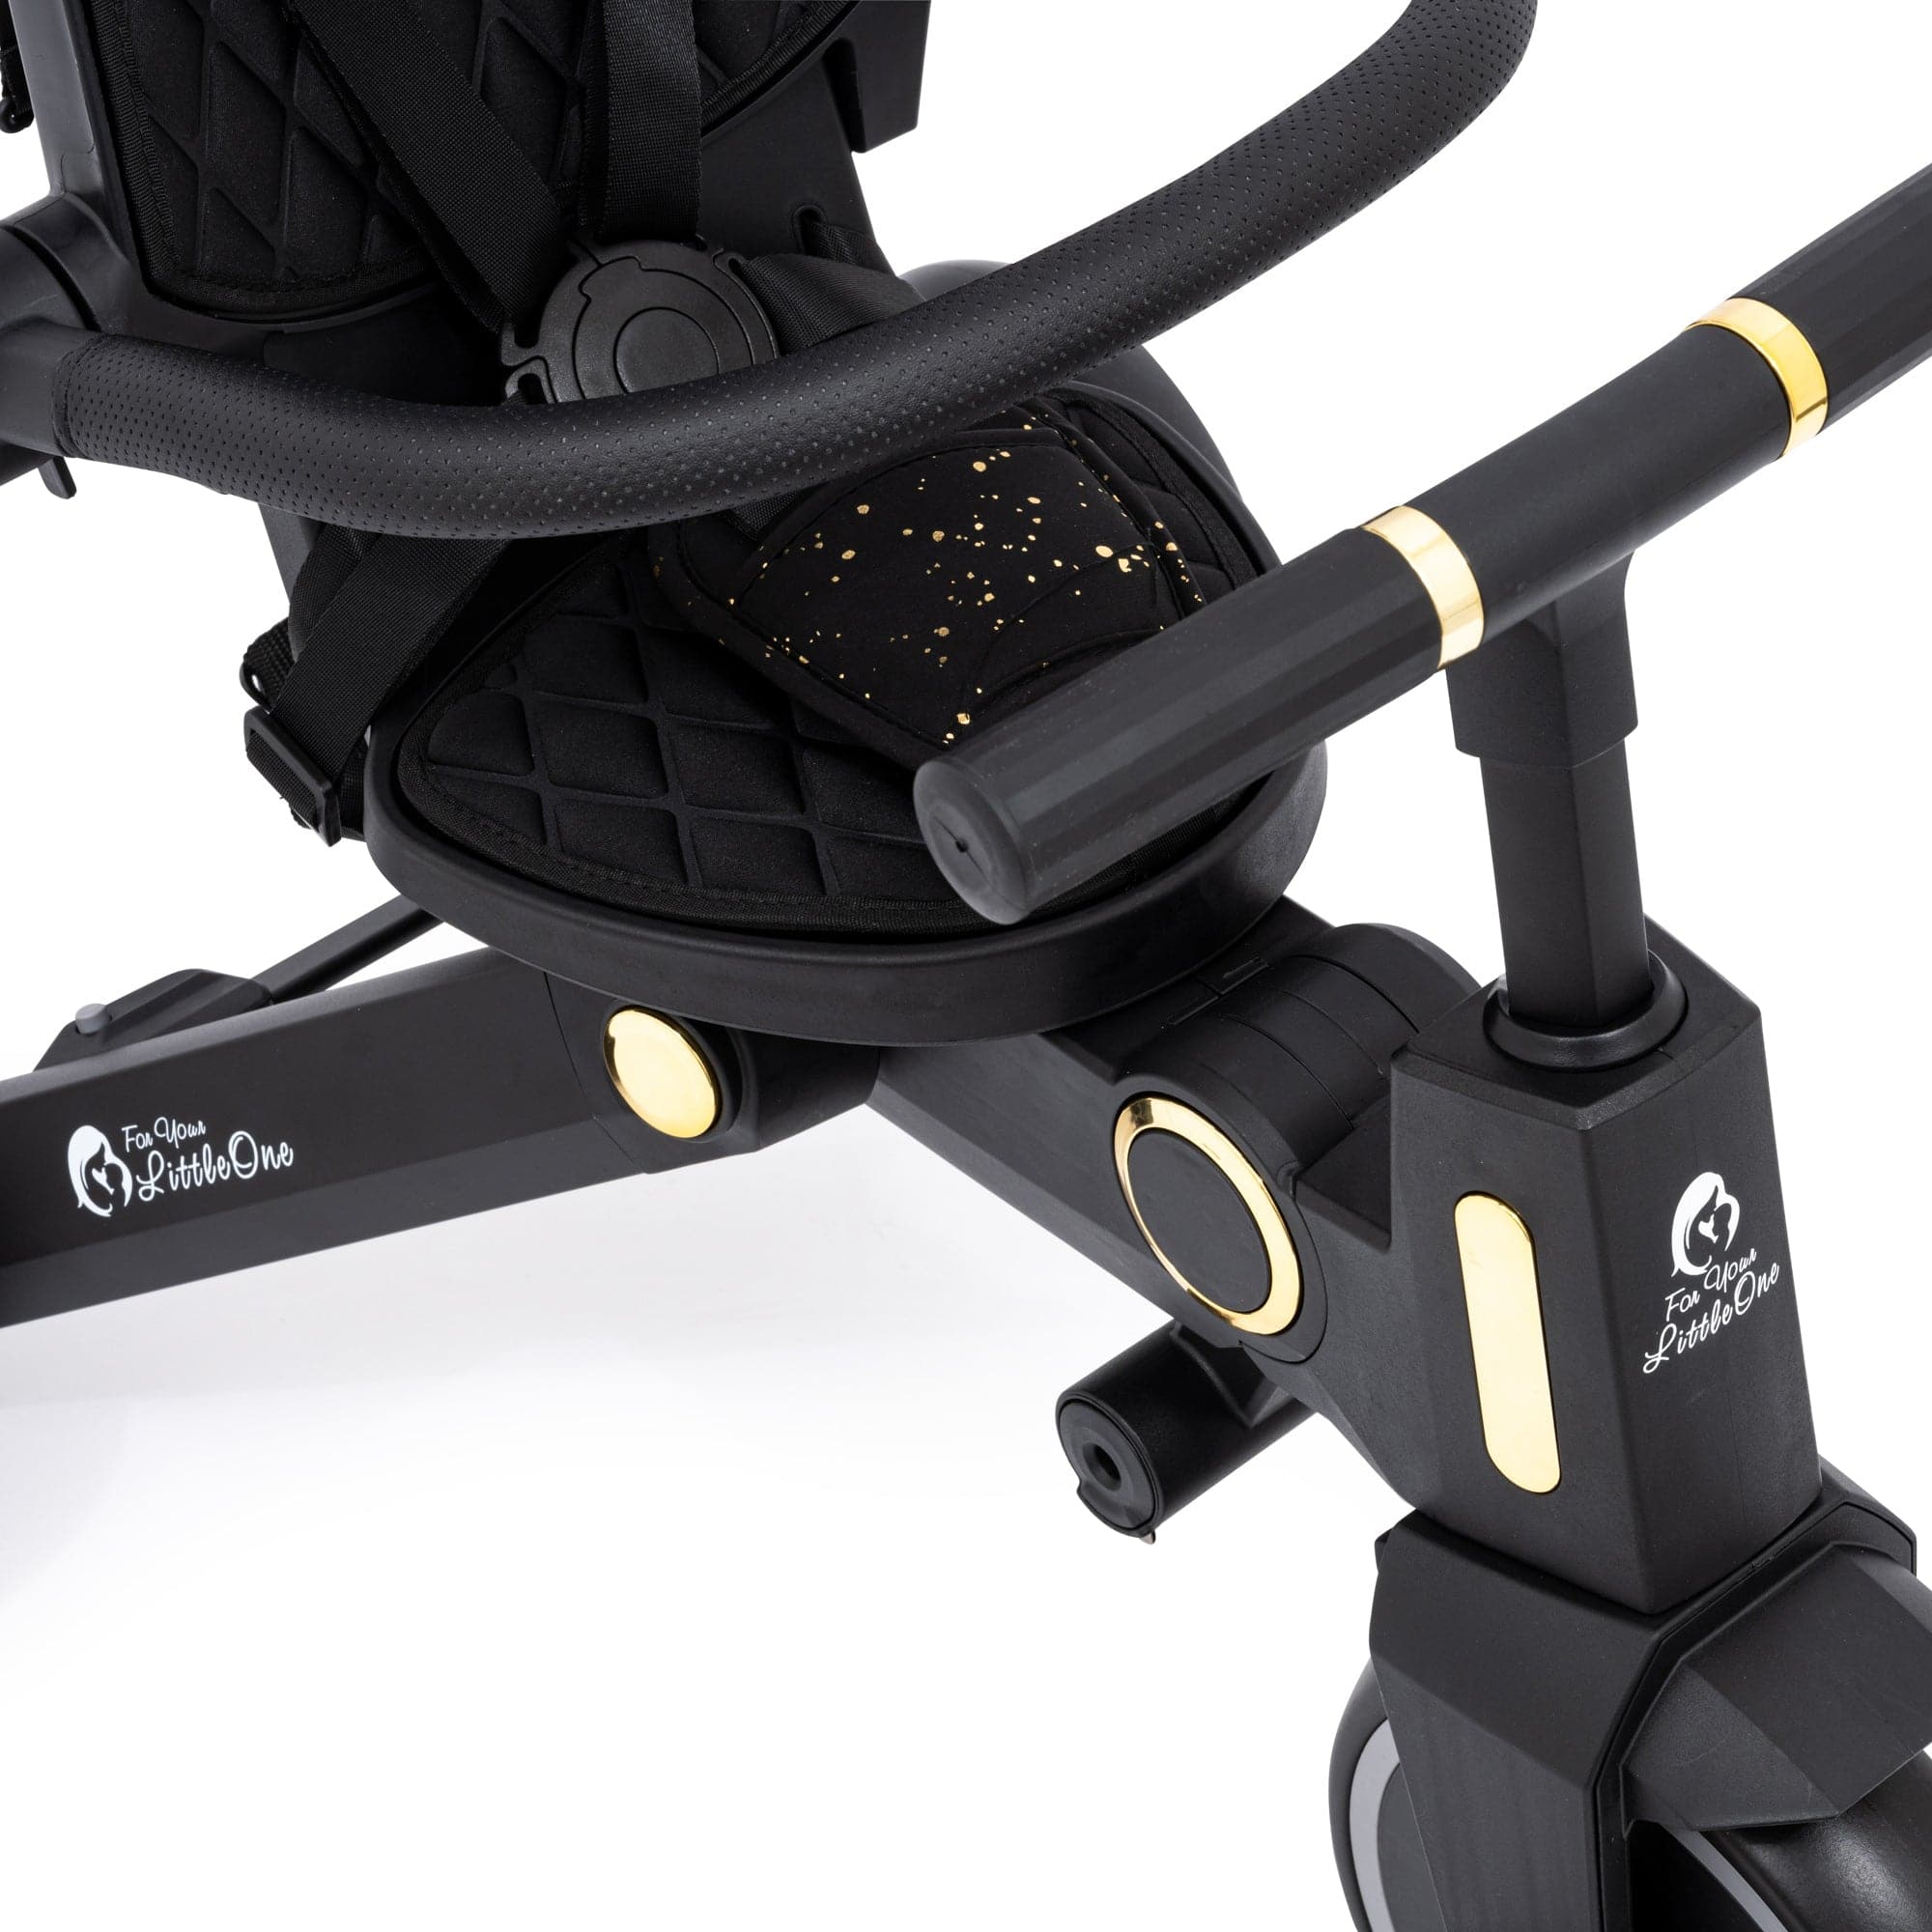 Foryourlittleone Xplor Plus Foldable Trike - Black & Gold - For Your Little One